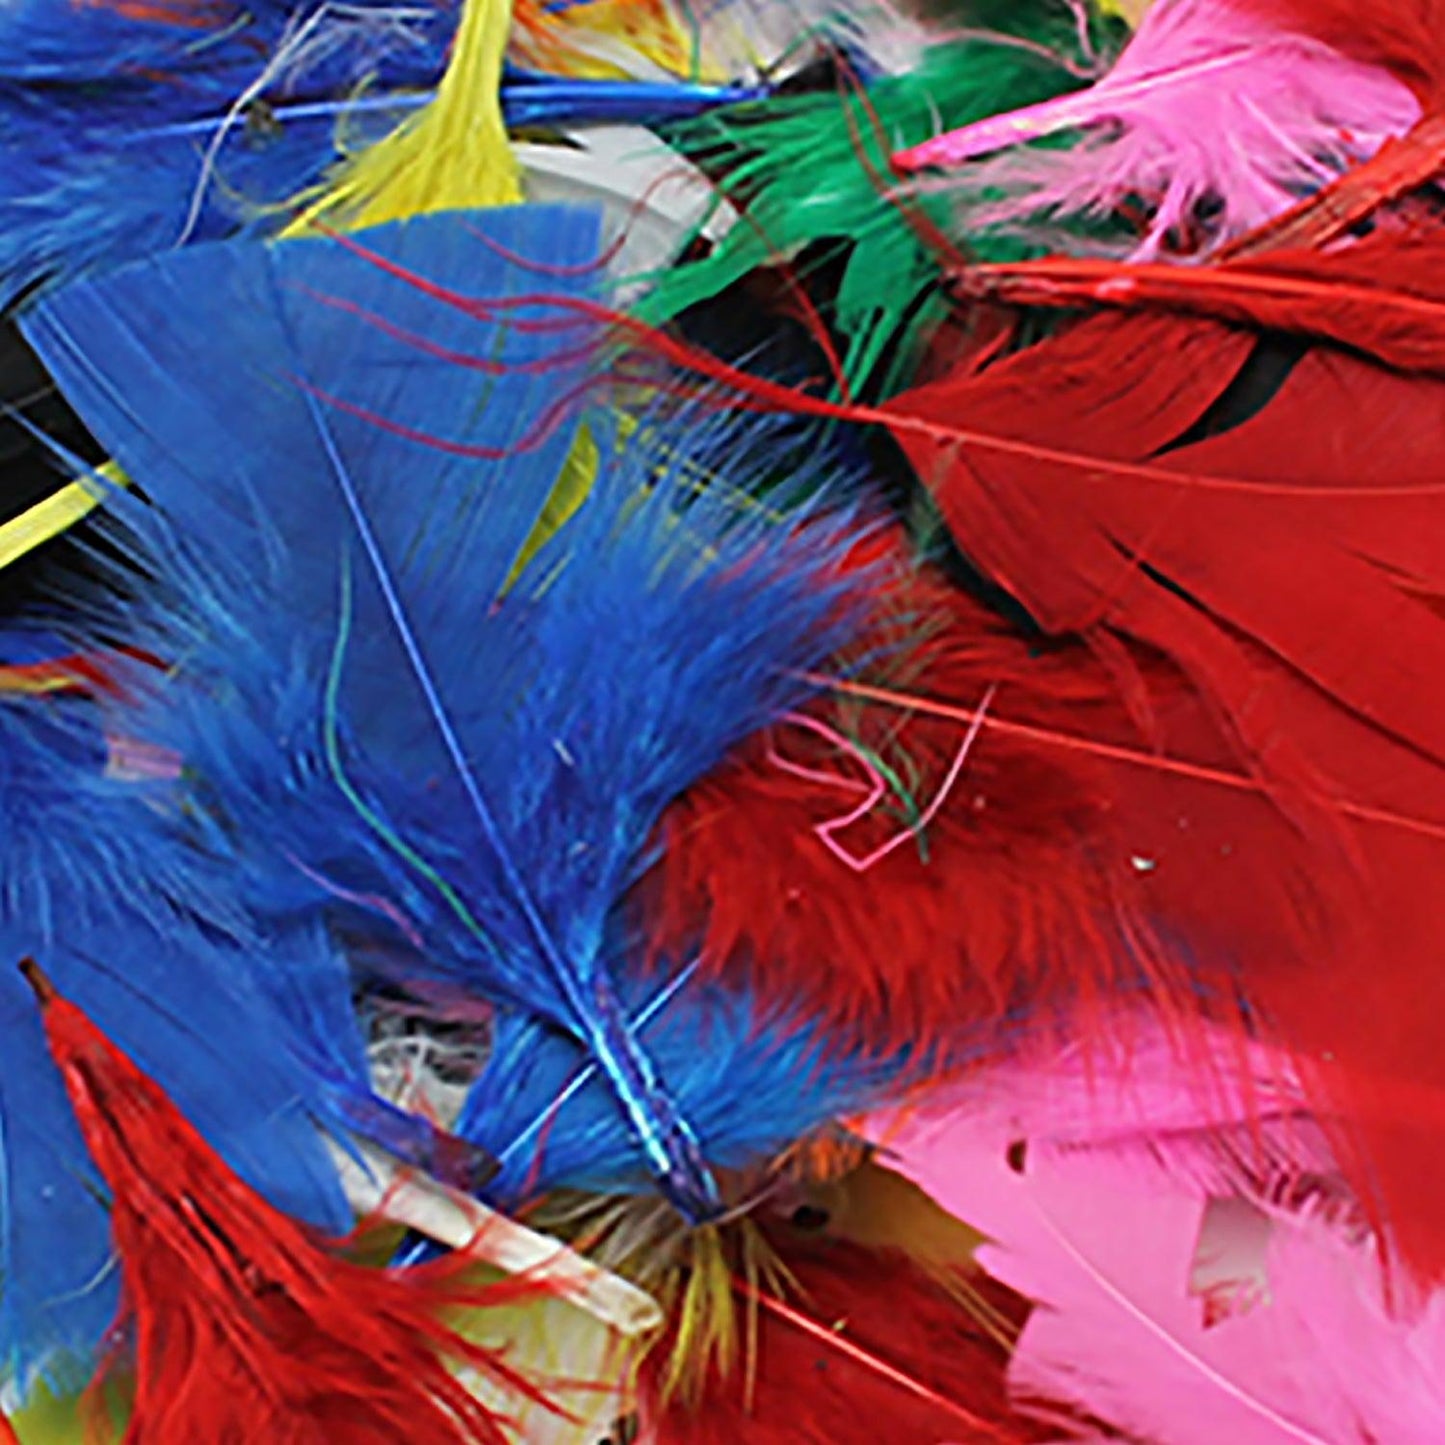 Turkey Feathers, Bright Colors, 14 Grams Per Pack, 12 Packs - Loomini